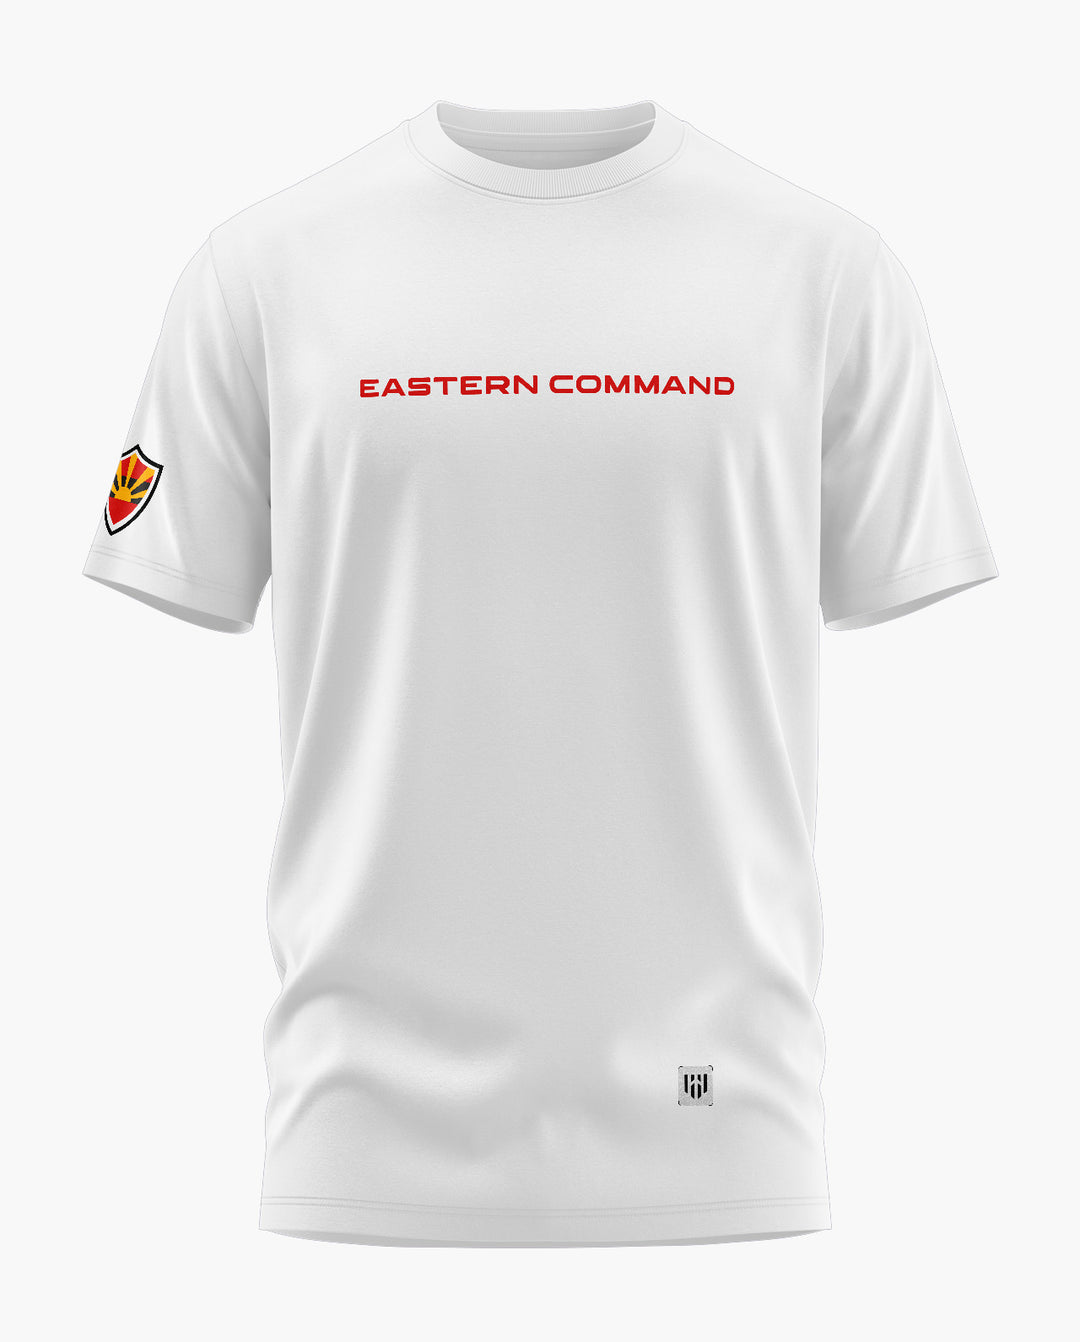 EASTERN COMMAND T-Shirt